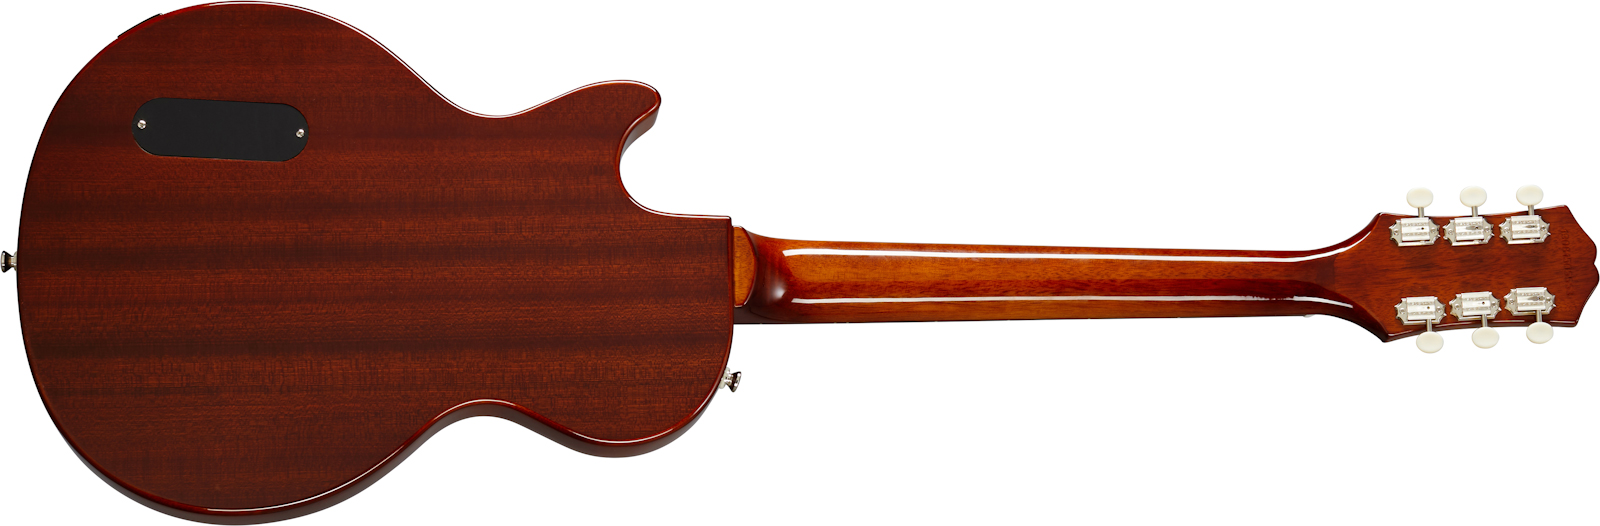 Epiphone Les Paul Junior P90 Ht Rw - Vintage Sunburst - Single-Cut-E-Gitarre - Variation 1